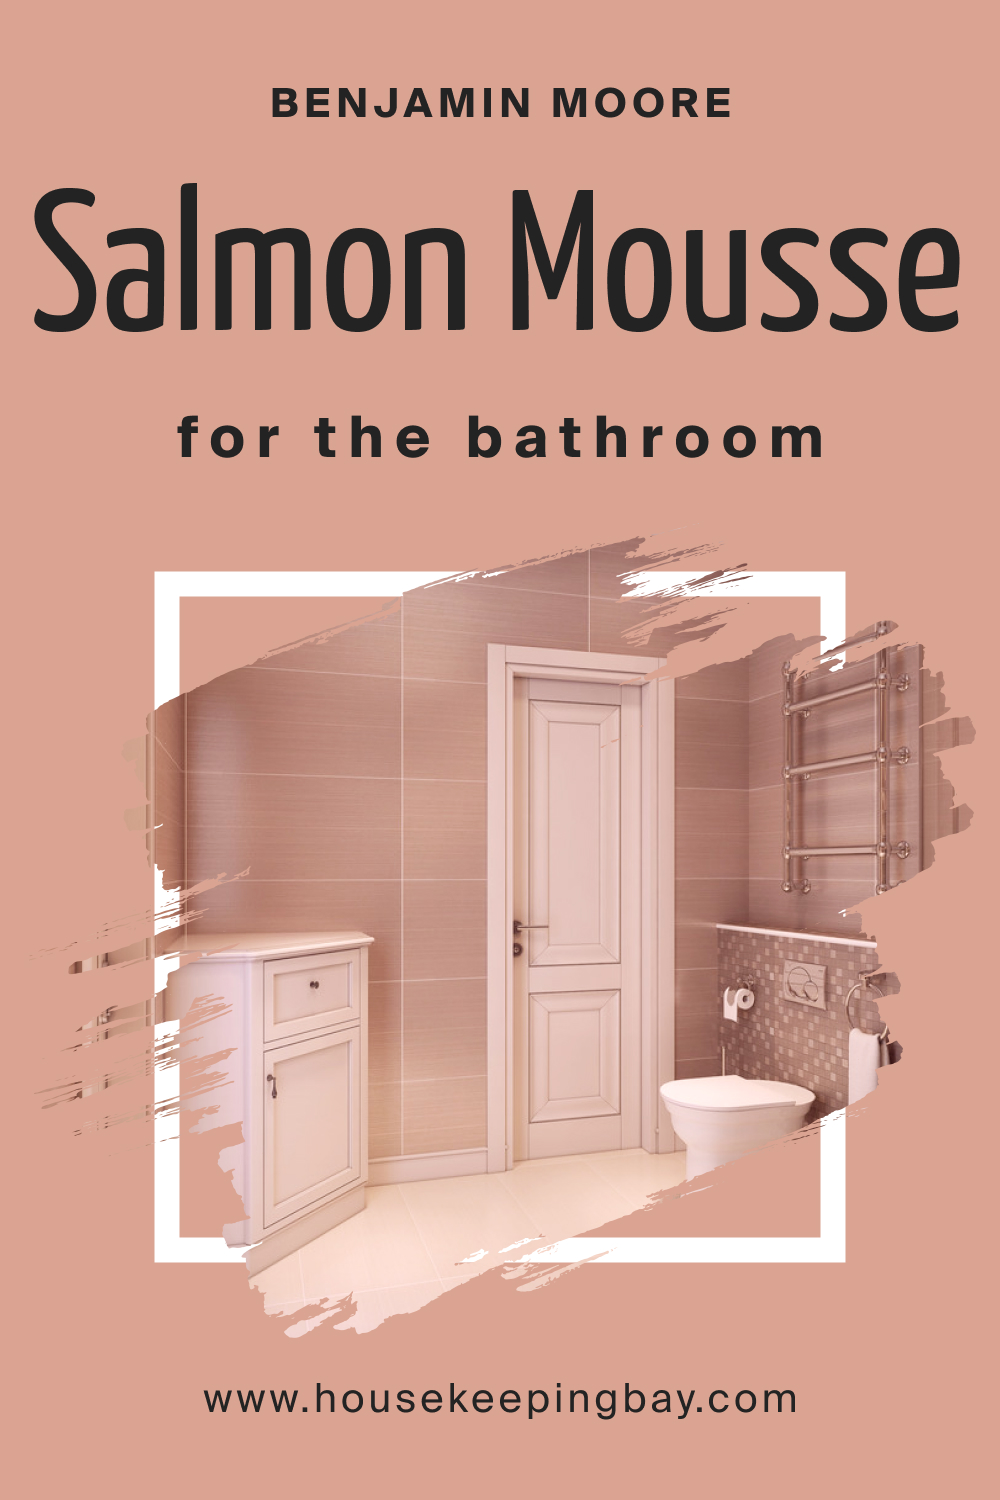 Benjamin Moore. BM Salmon Mousse 046 in the Bathroom